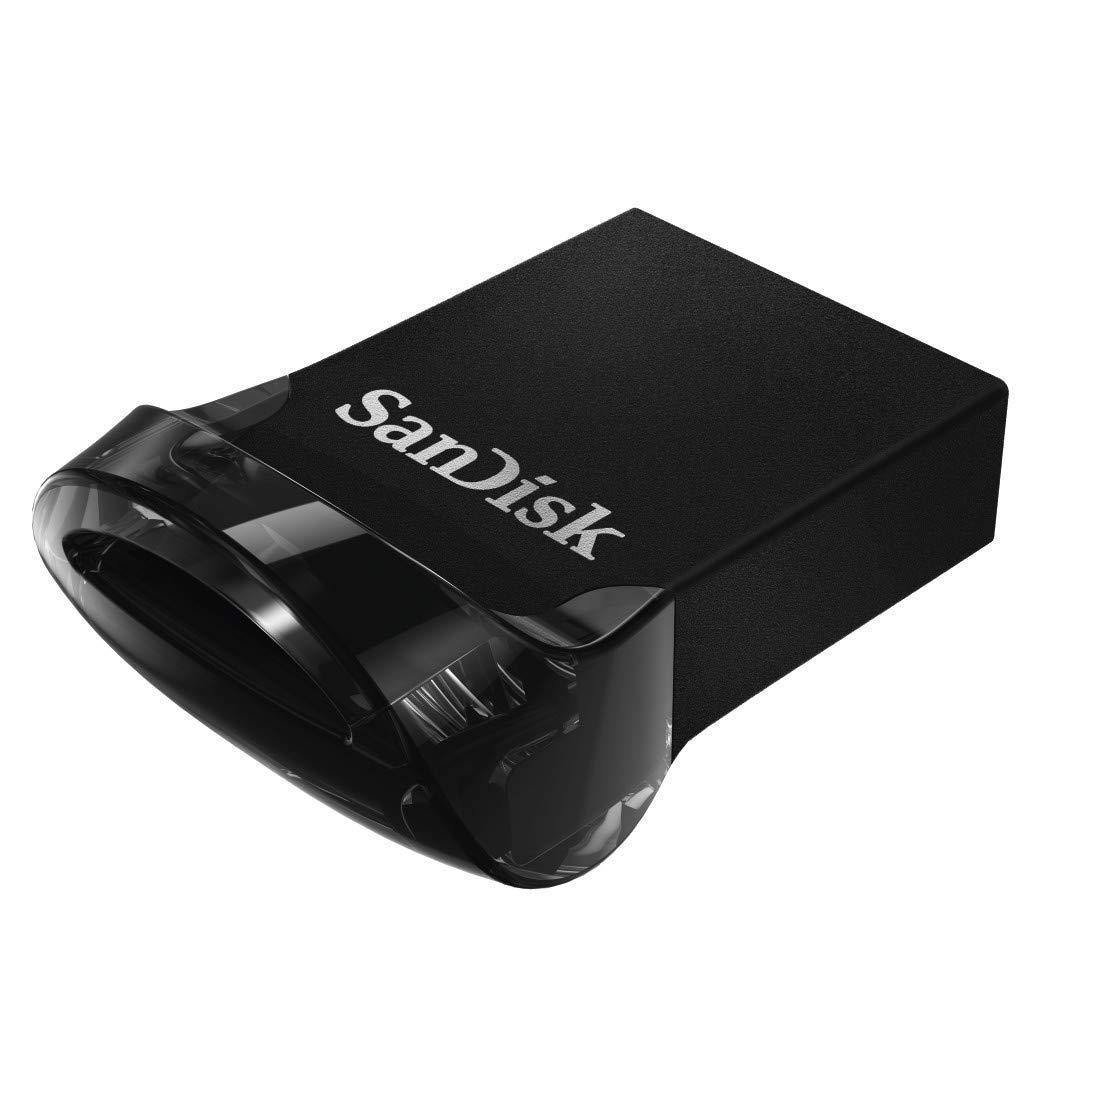 SanDisk Ultra Fit 3.1 USB Flash Drive-USB Pen drives-dealsplant